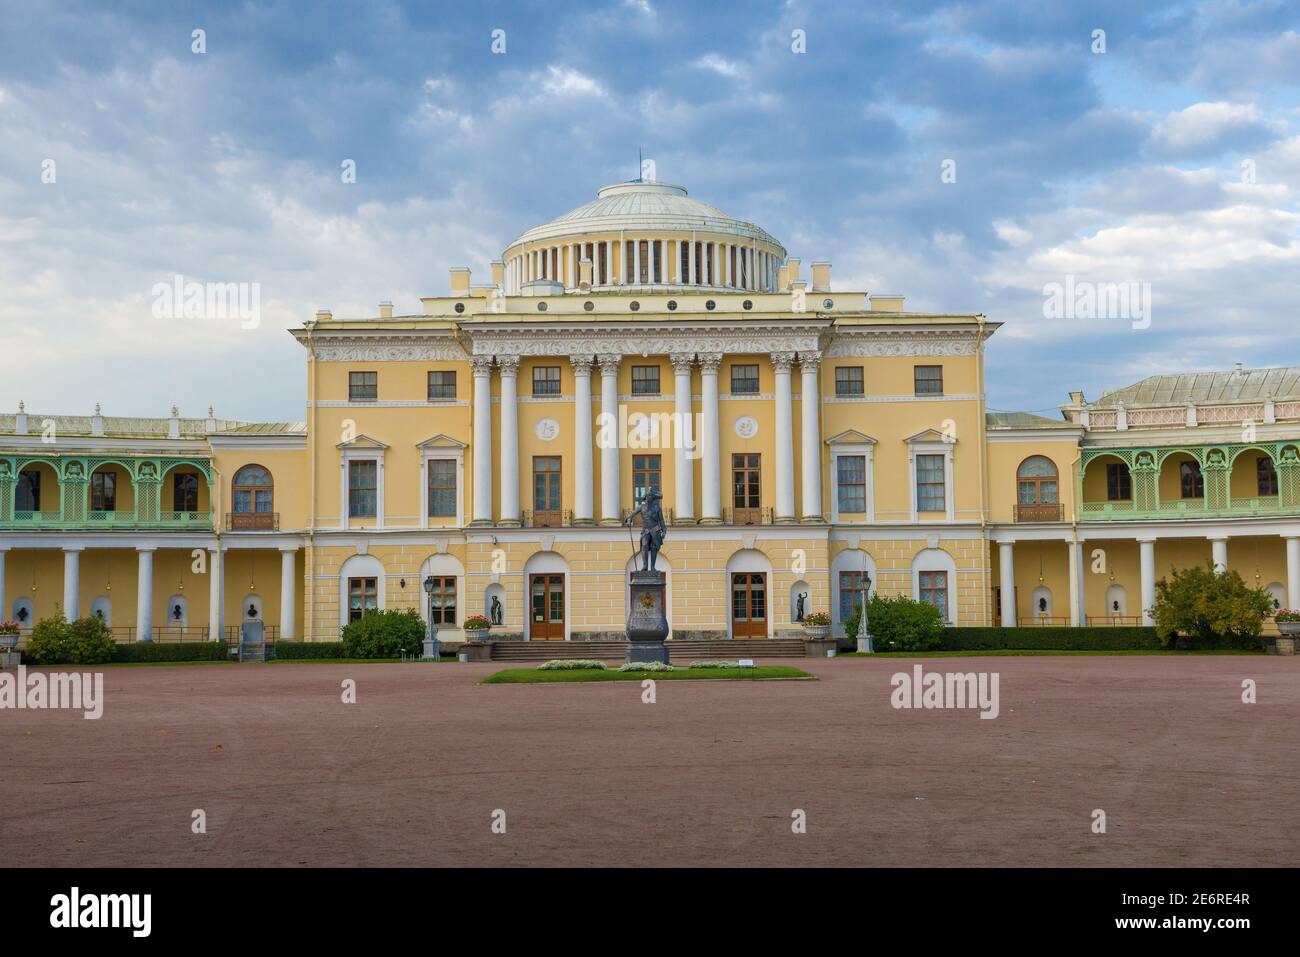 PAVLOVSK, RUSSIA - SEPTEMBER 28, 2020: Cloudy September morning at the Pavlovsk Palace Stock Photo